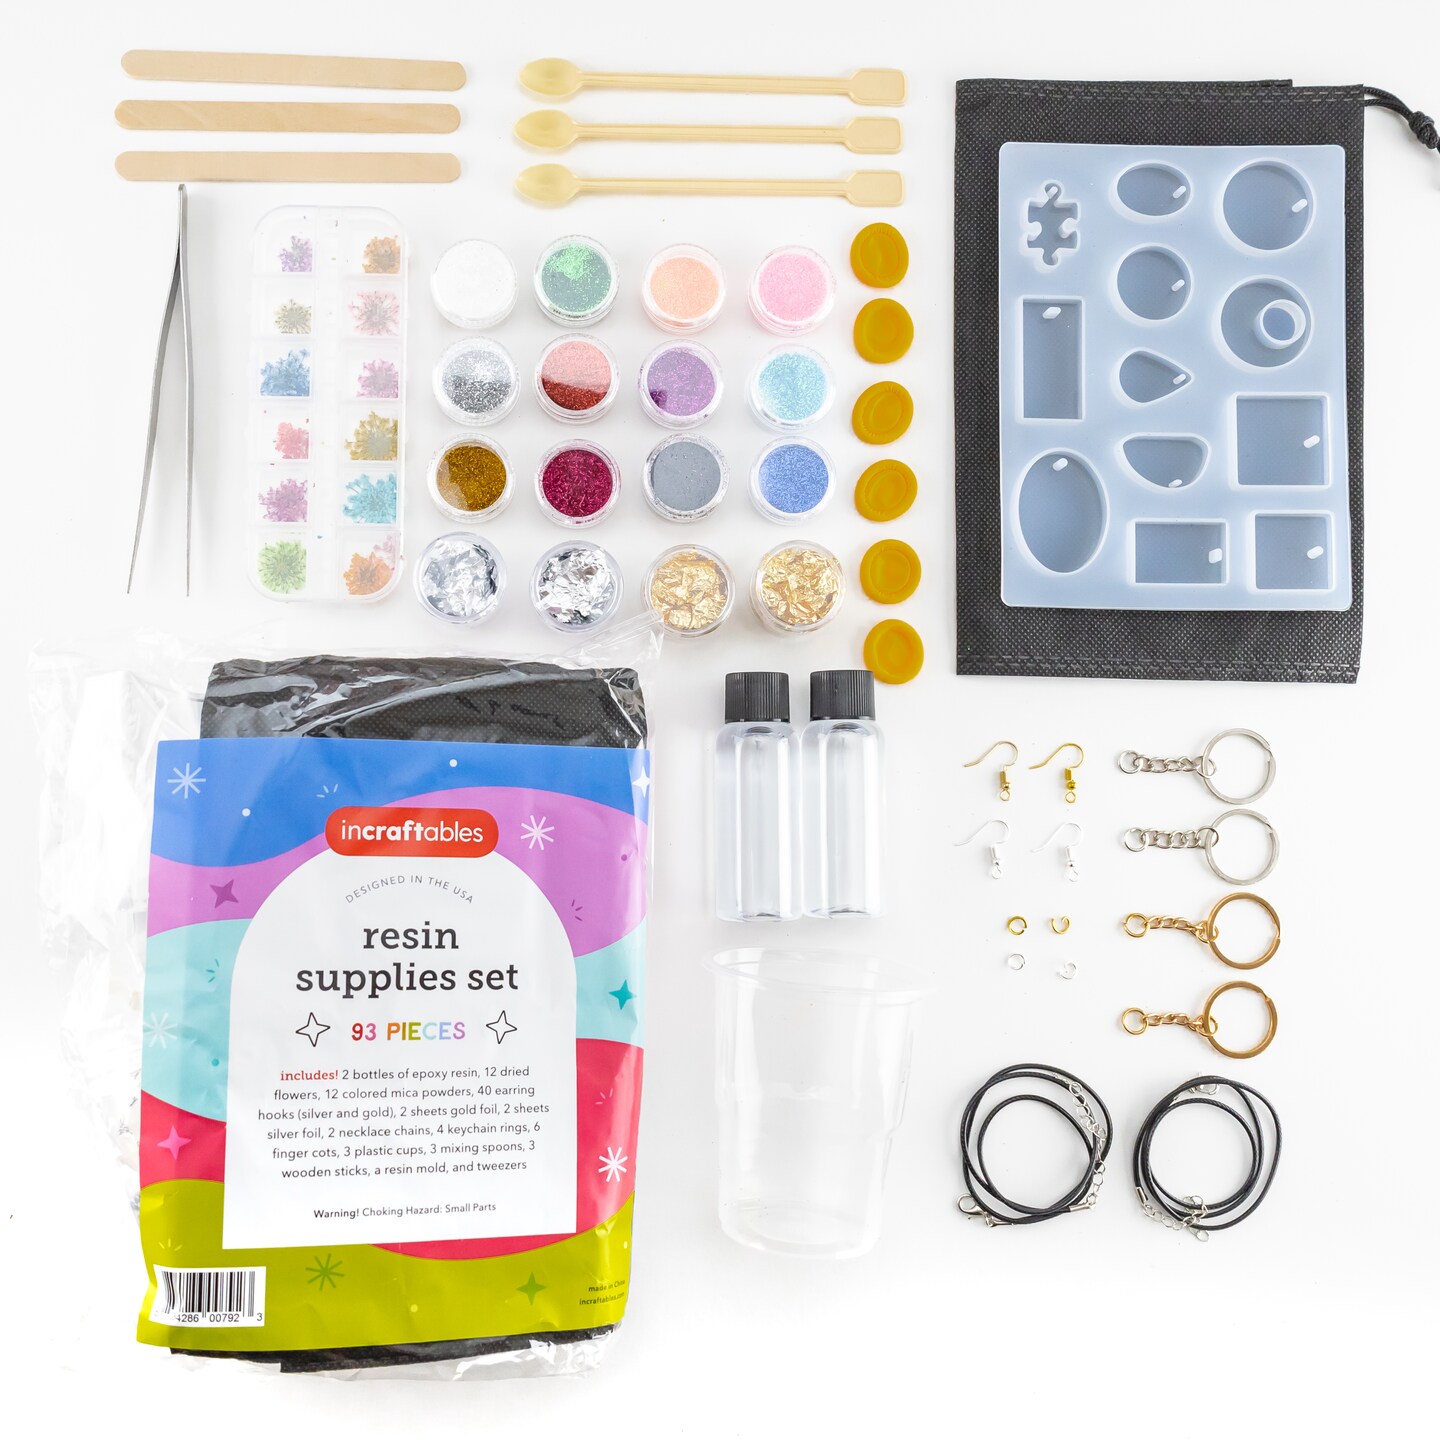 Pearoft Resin Kit by DIY Creative Kids - Starter Jewelry Making Resin Kit  for Beginners - Gift Set Teenager Girls Birthday Presents DIY Kids Resin